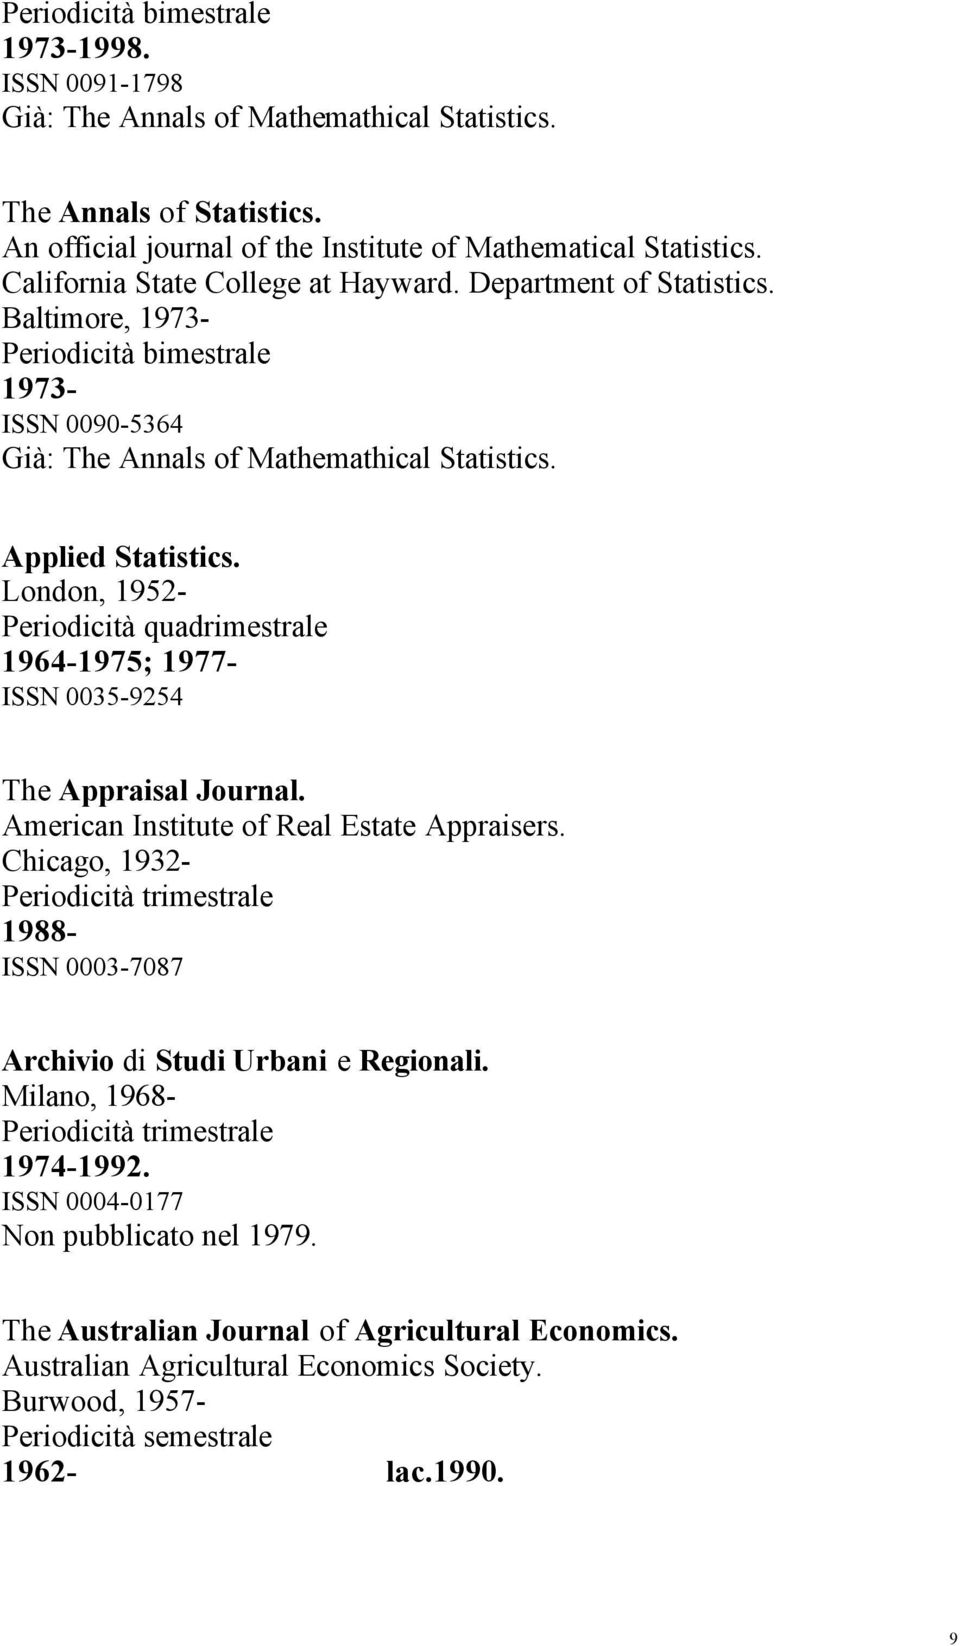 London, 1952-1964-1975; 1977- ISSN 0035-9254 The Appraisal Journal. American Institute of Real Estate Appraisers. Chicago, 1932-1988- ISSN 0003-7087 Archivio di Studi Urbani e Regionali.